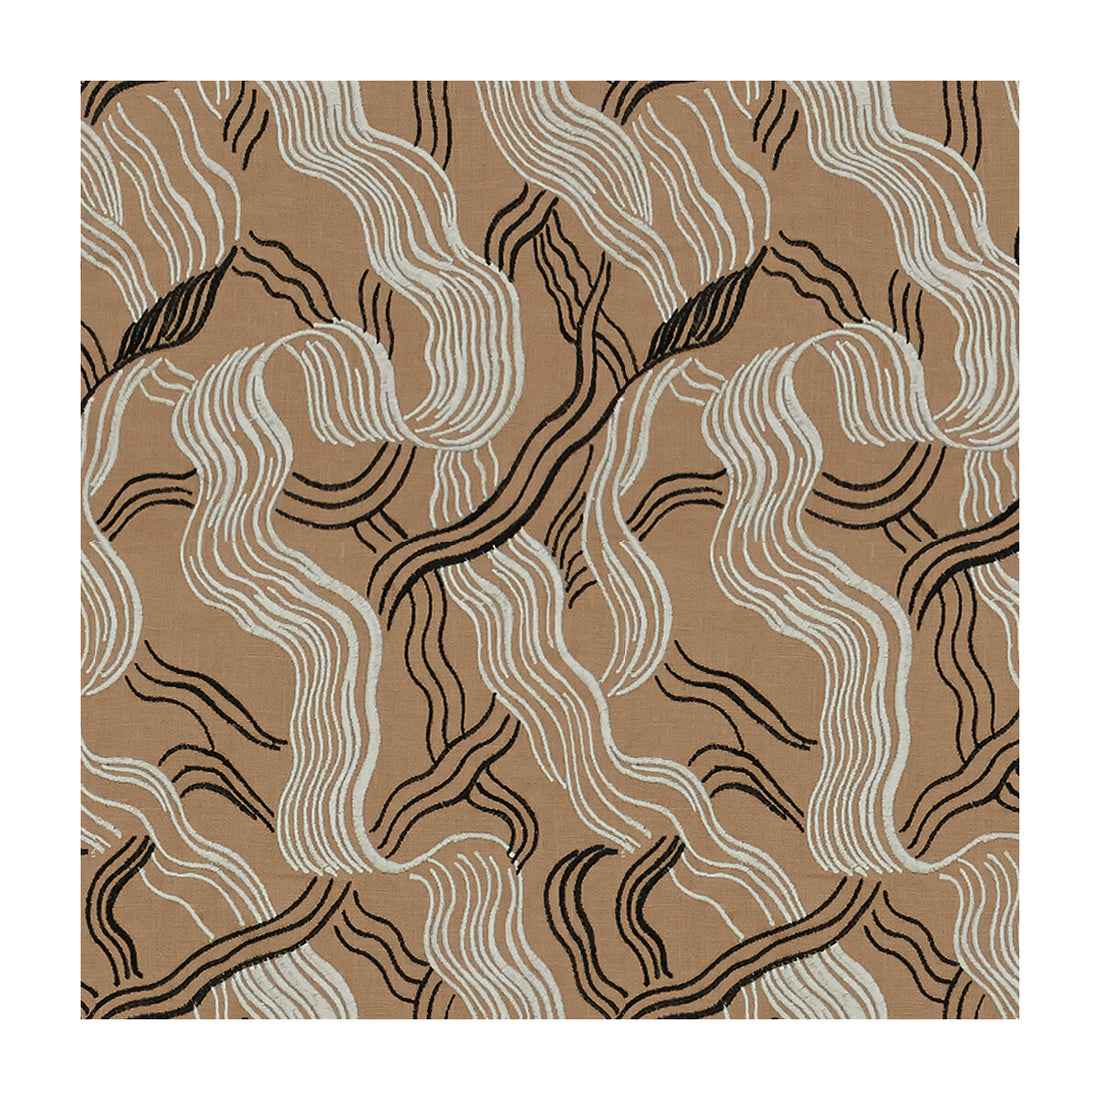 Jubilee Emb fabric in shell color - pattern GWF-3524.718.0 - by Lee Jofa Modern in the Kelly Wearstler III collection